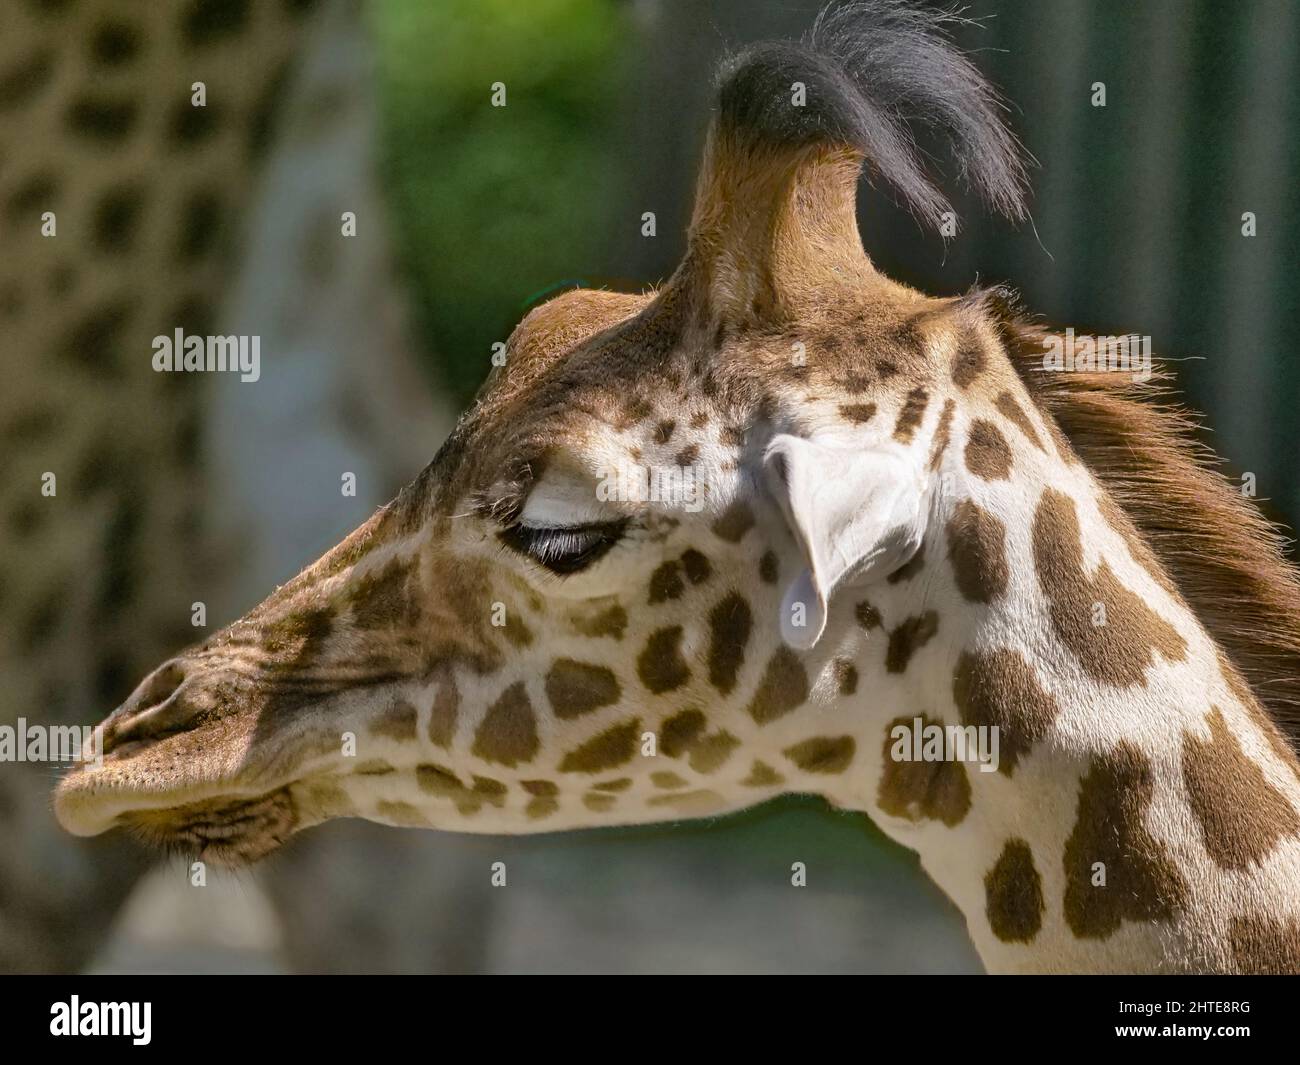 A headshot of a cute giraffe in the blurred background Stock Photo